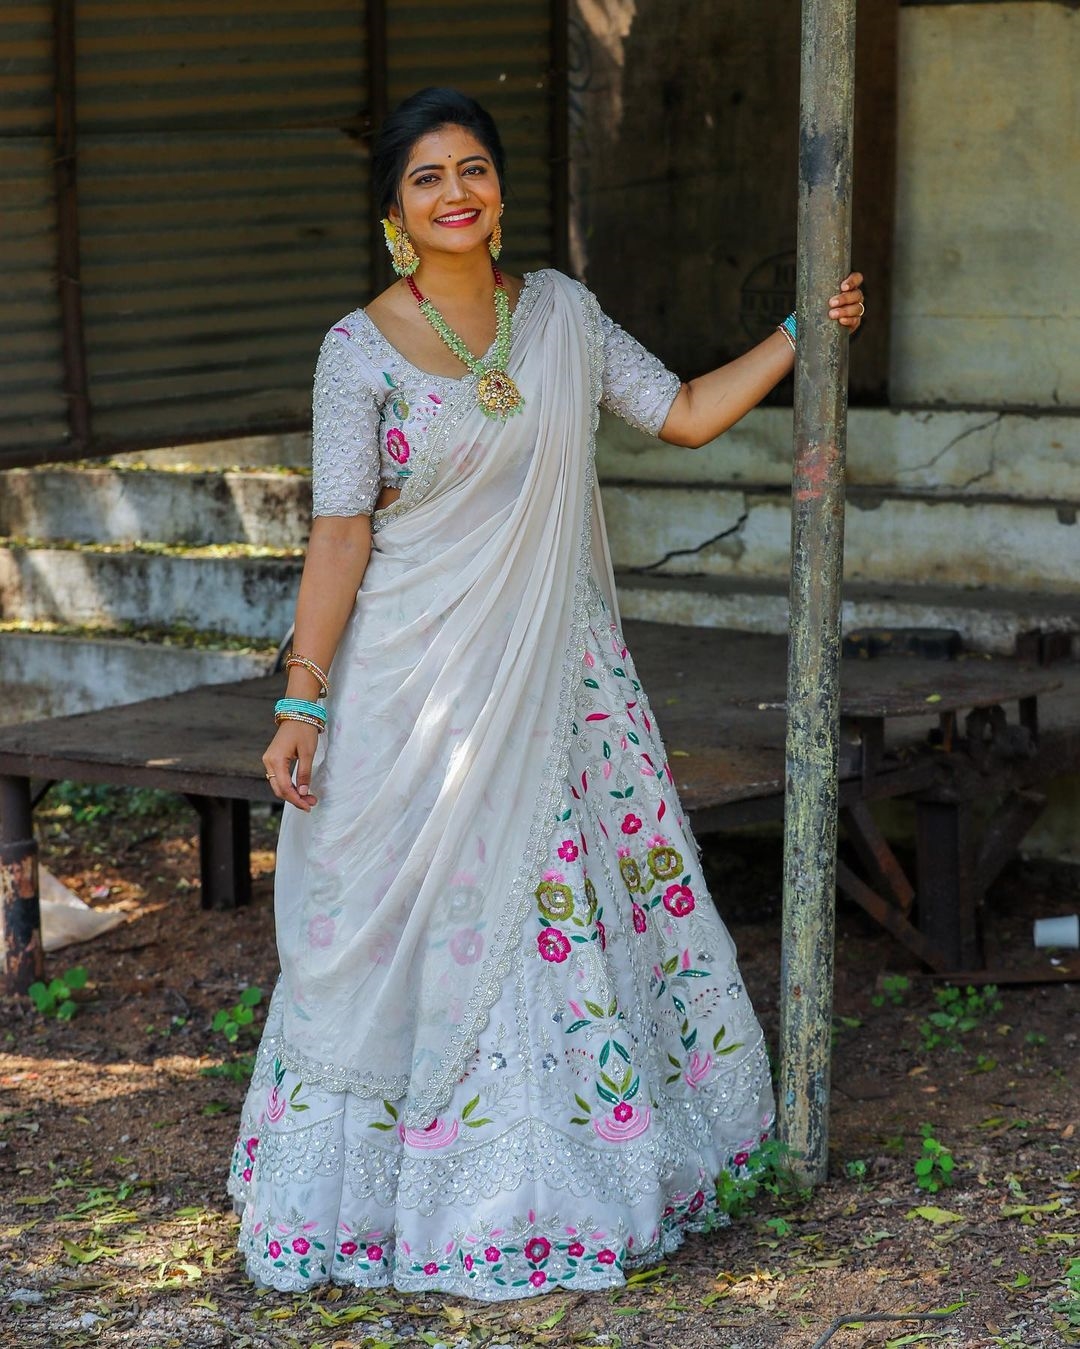 Shiva Jyothi New Photos In White Dress